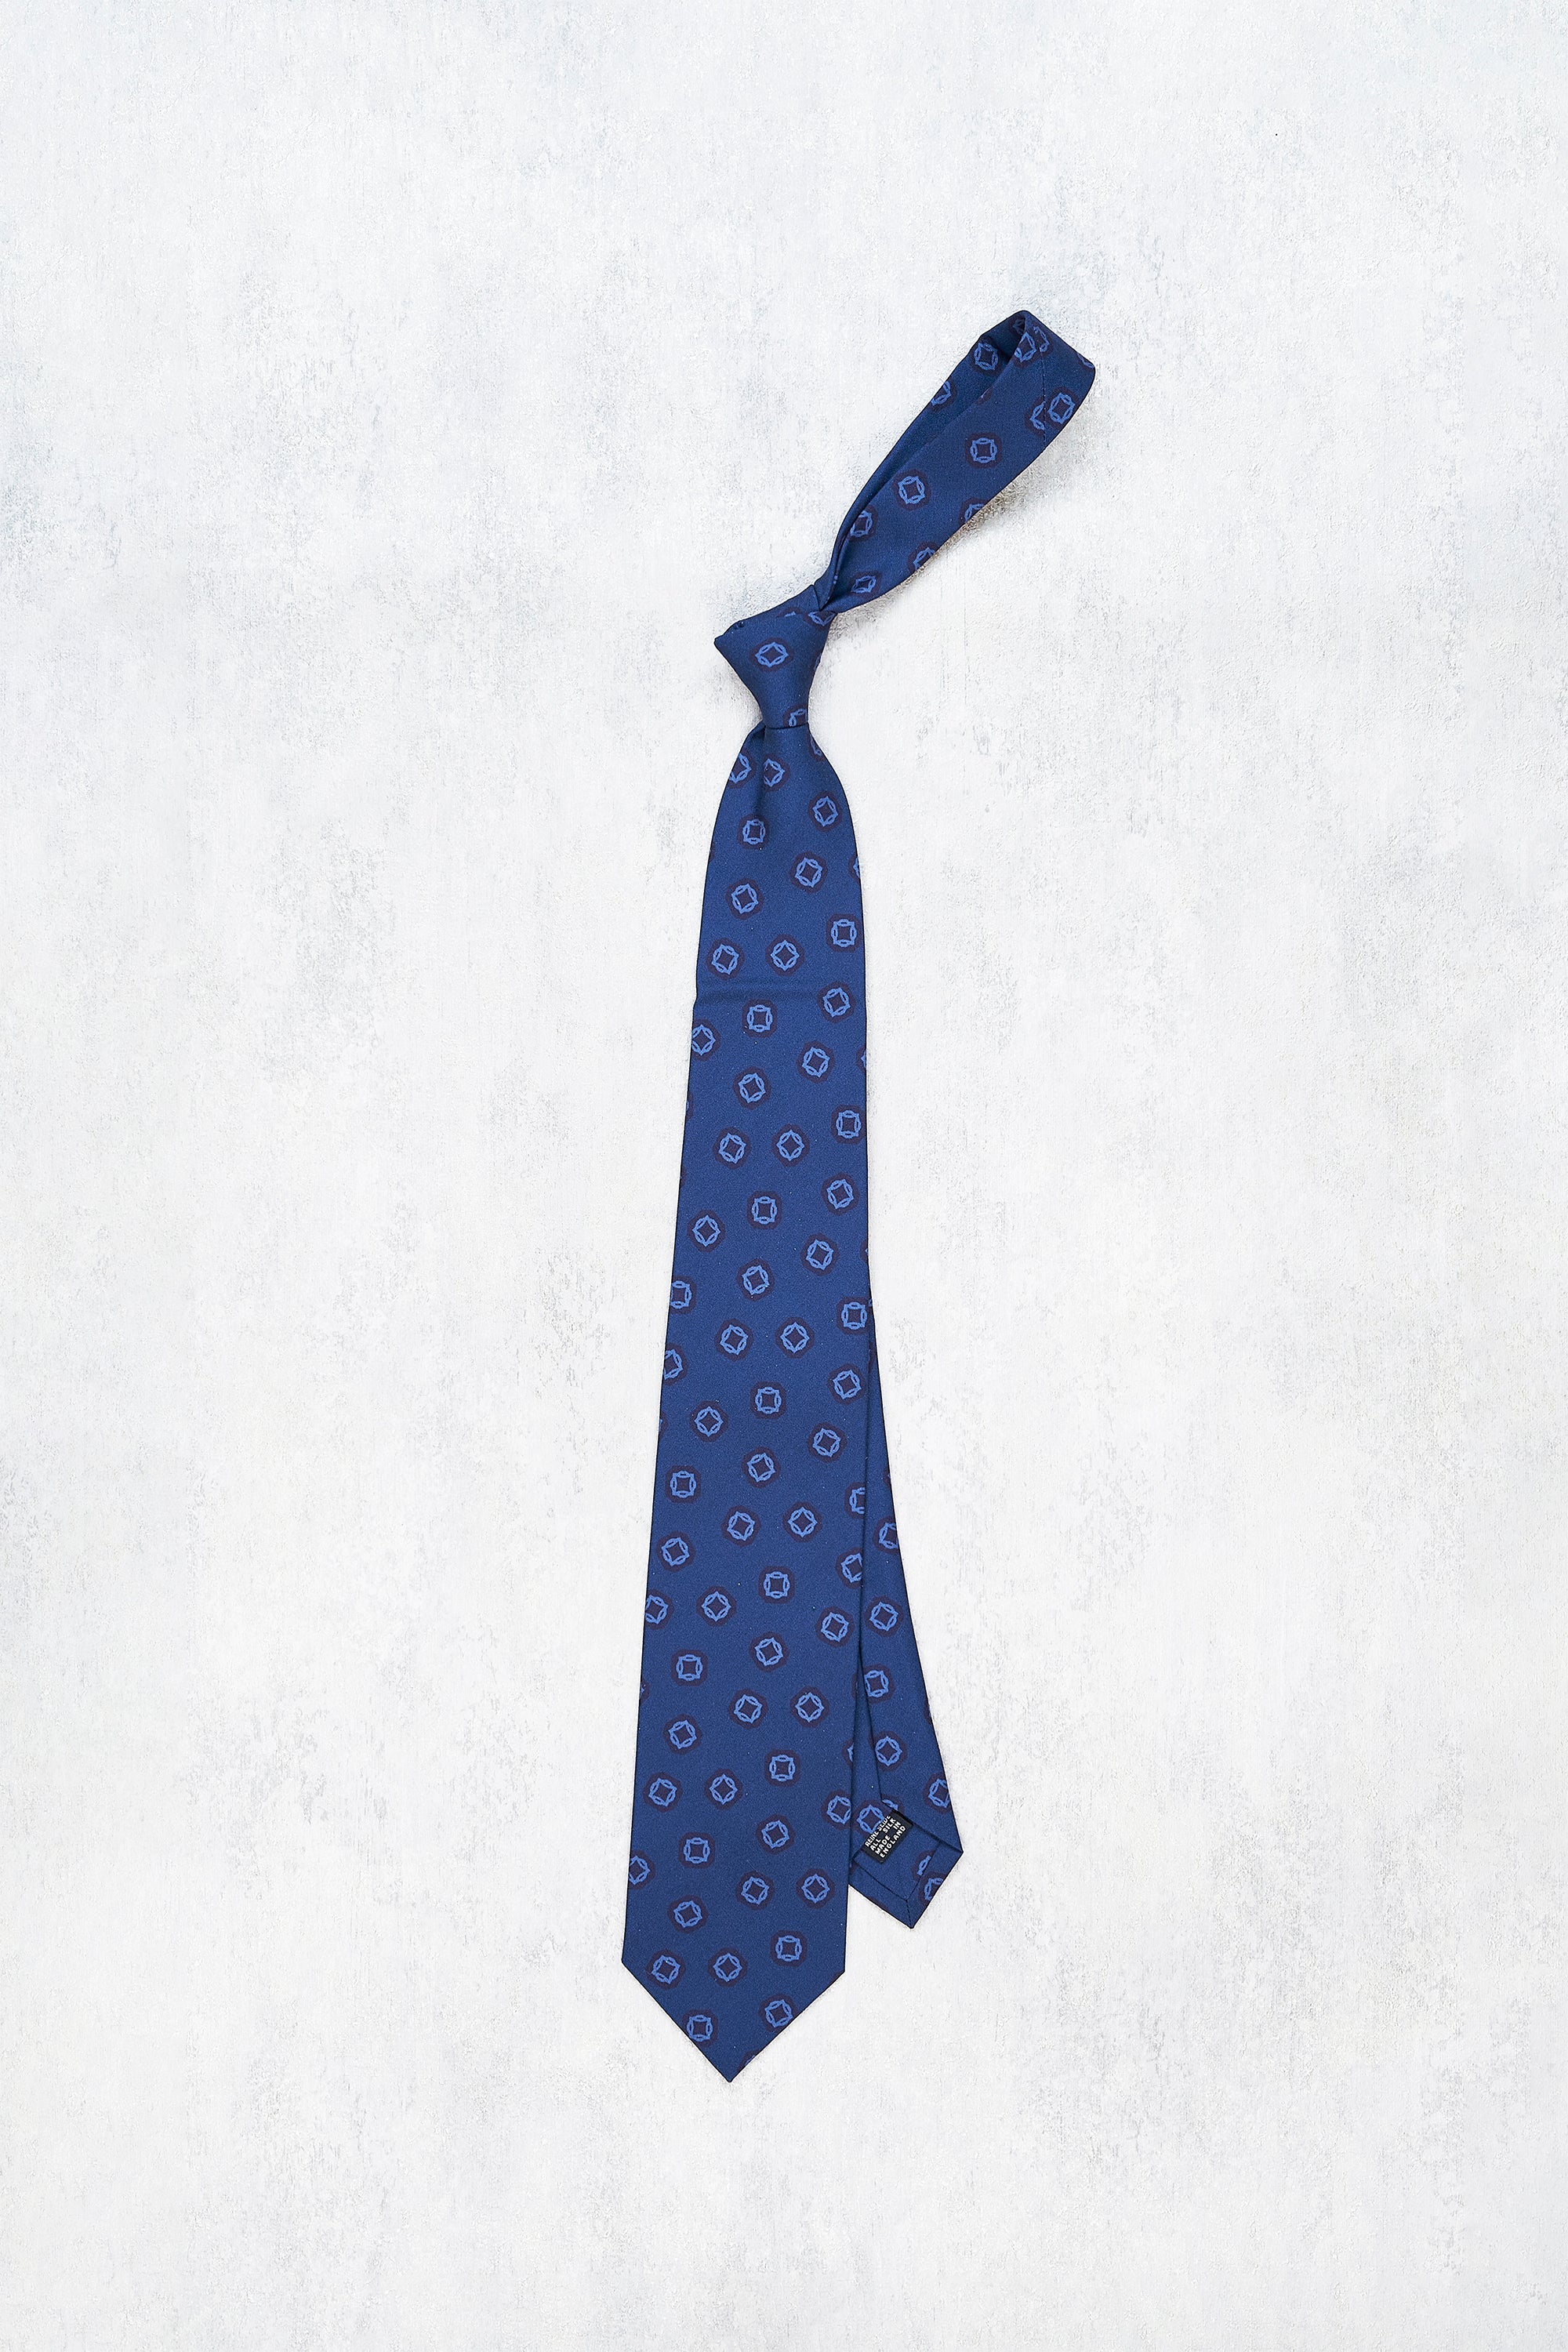 Drake's Blue Pattern Silk Tie